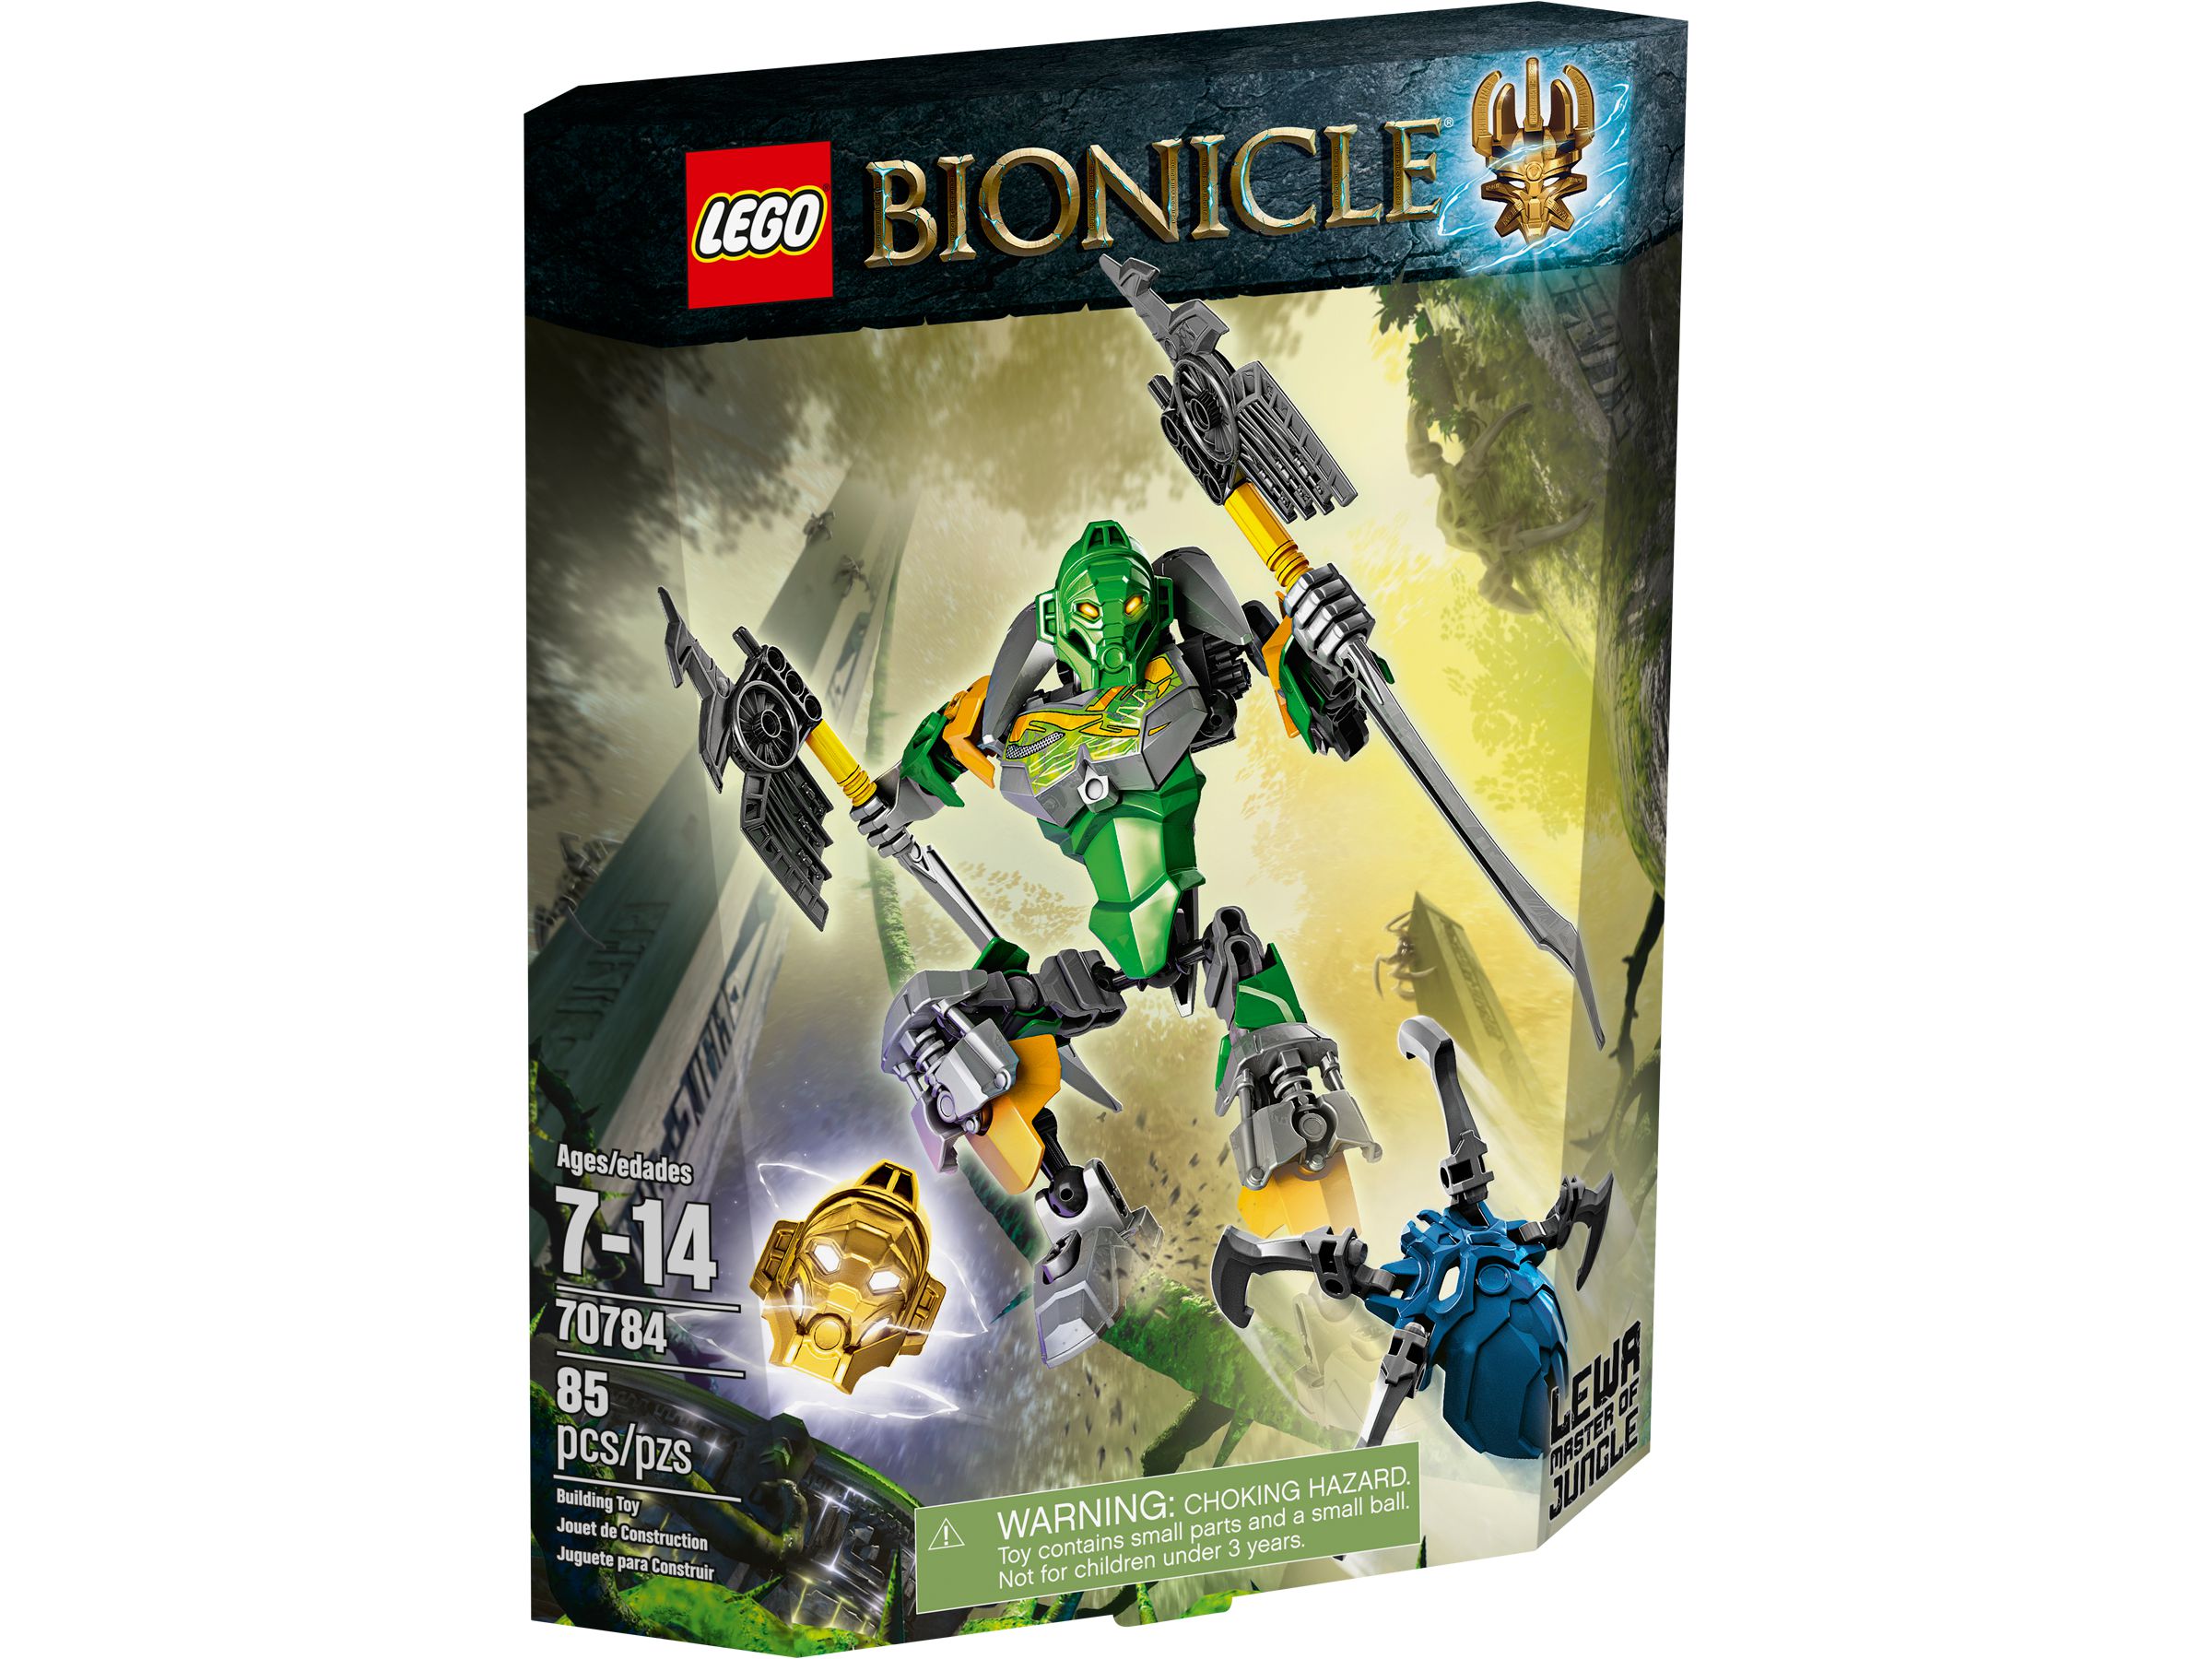 LEGO Bionicle 70784 Lewa – Meister des Dschungels LEGO_70784_alt1.jpg